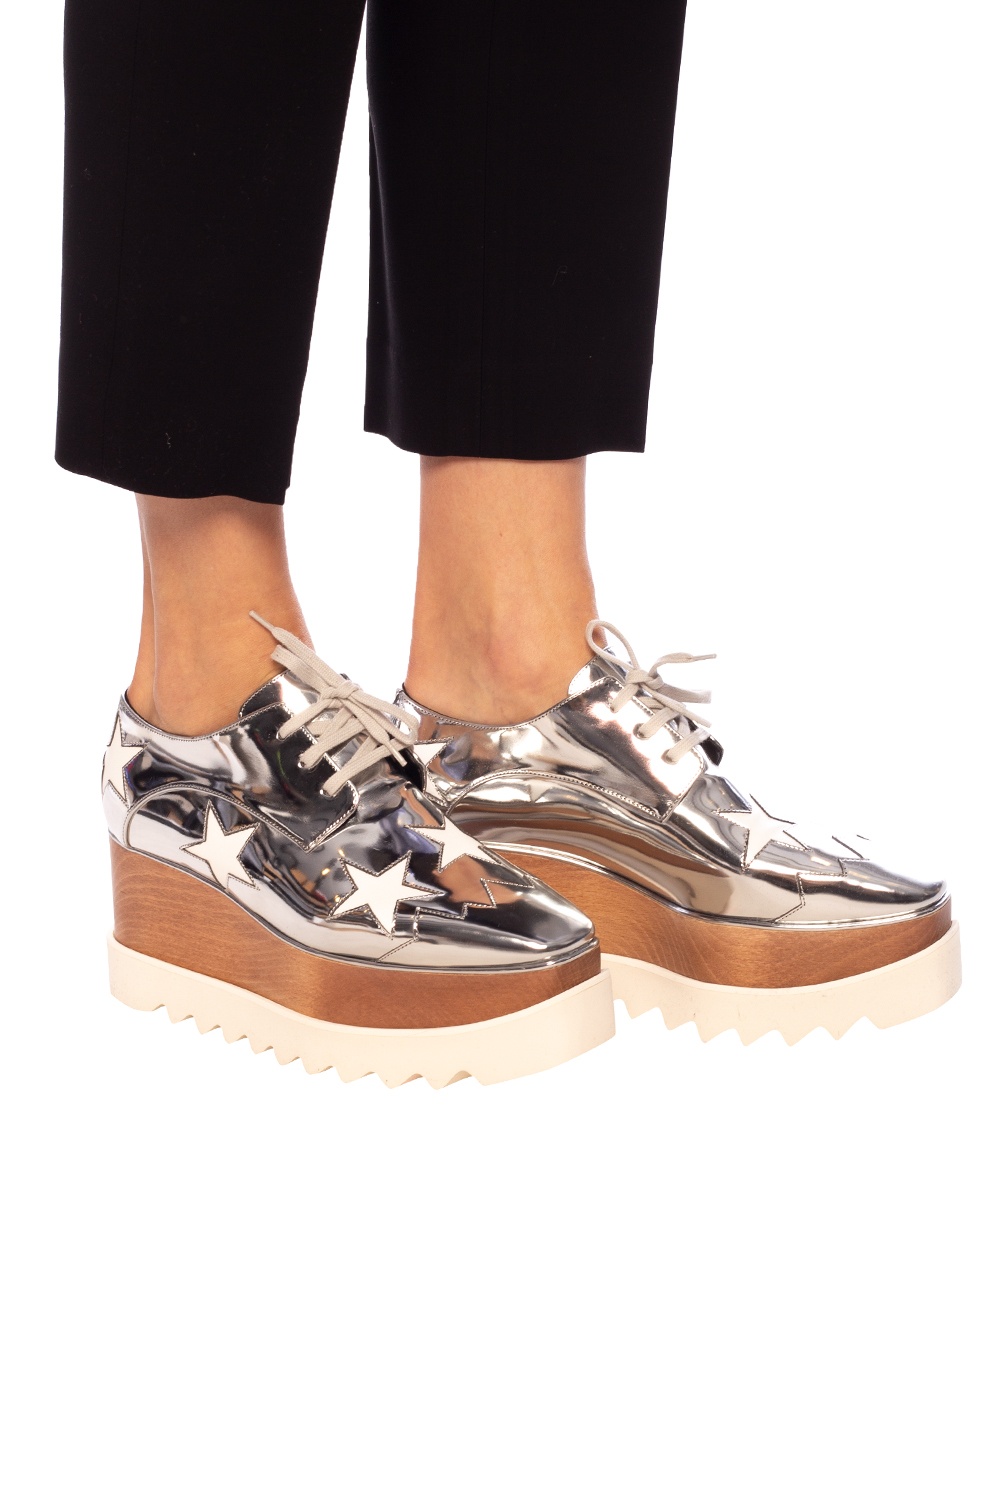 Stella McCartney 'Elyse' platform shoes | Women's Shoes | Vitkac